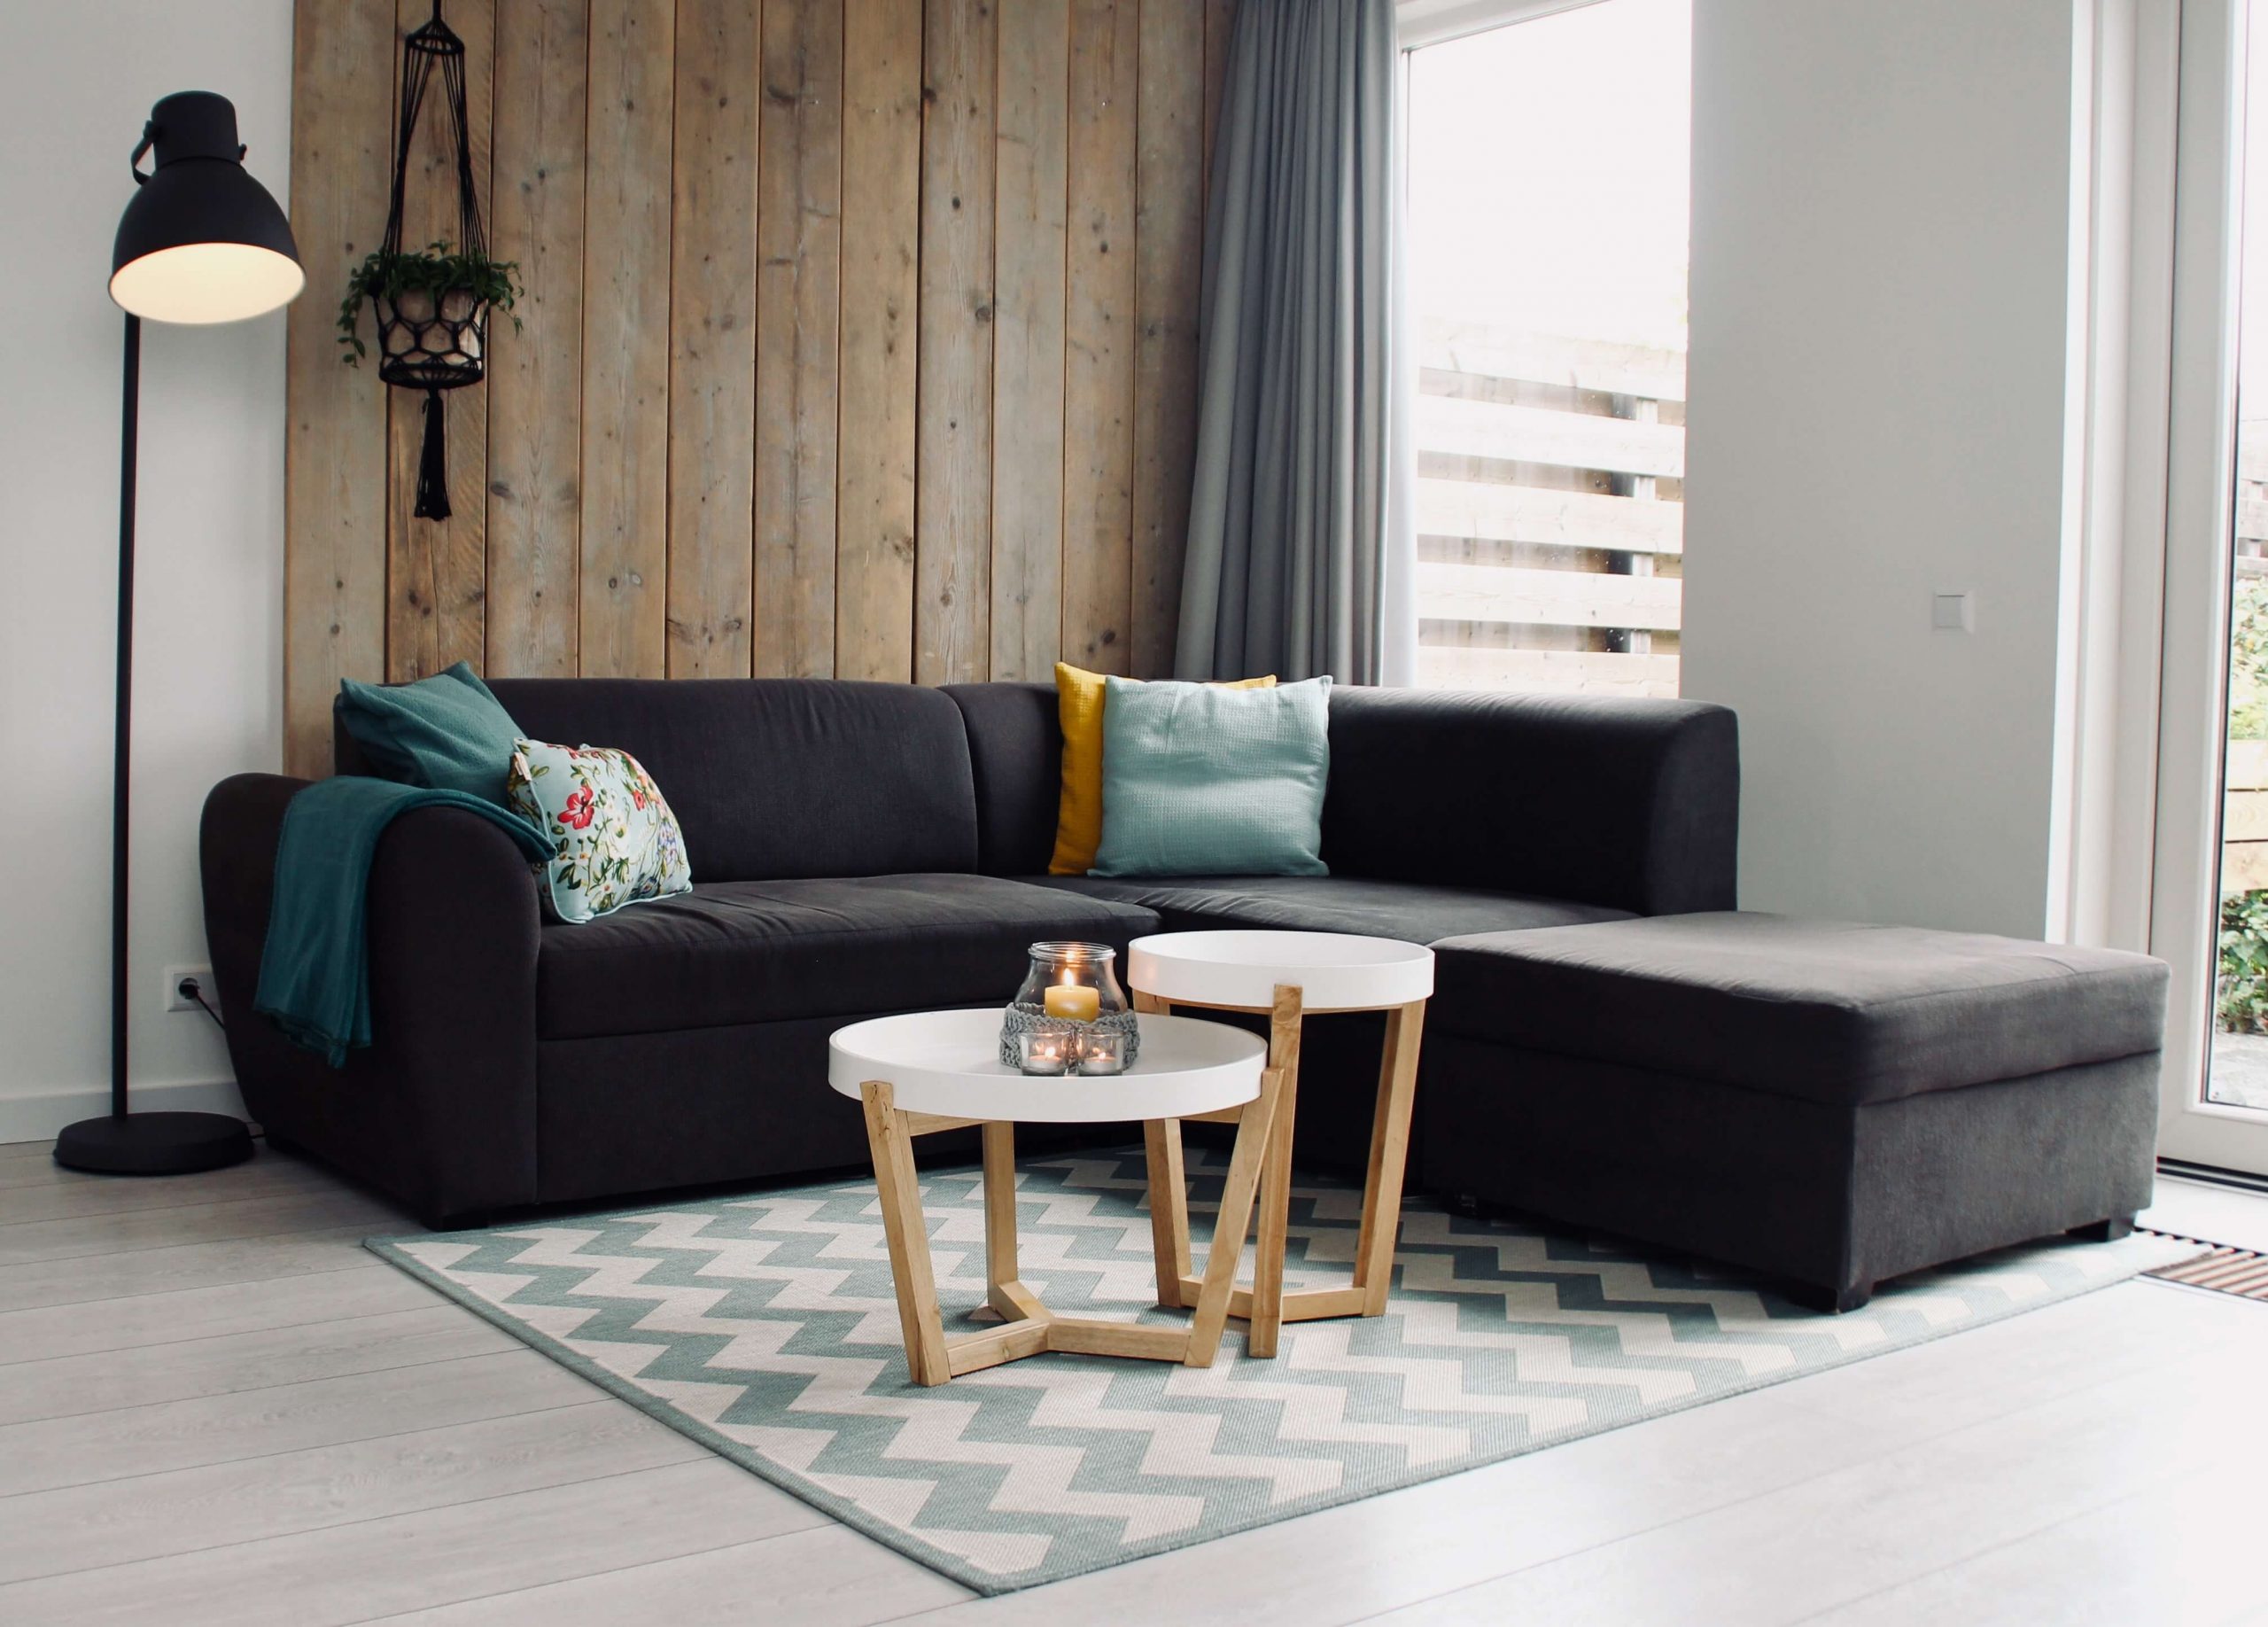 Choose-furniture-for-interior-design